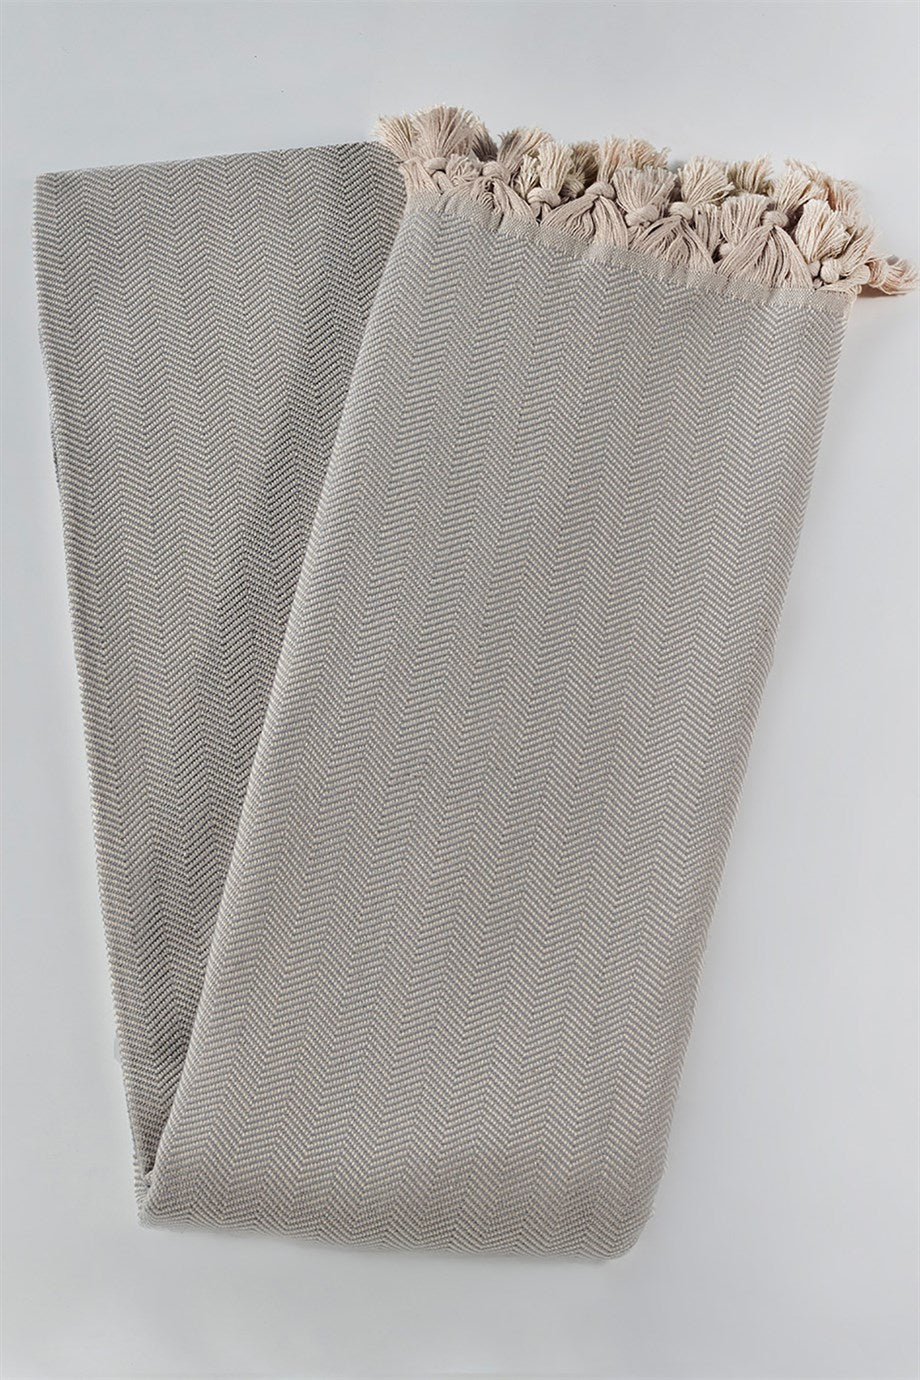 DENIZLI CONCEPT Herringbone Double Gray Bedspread